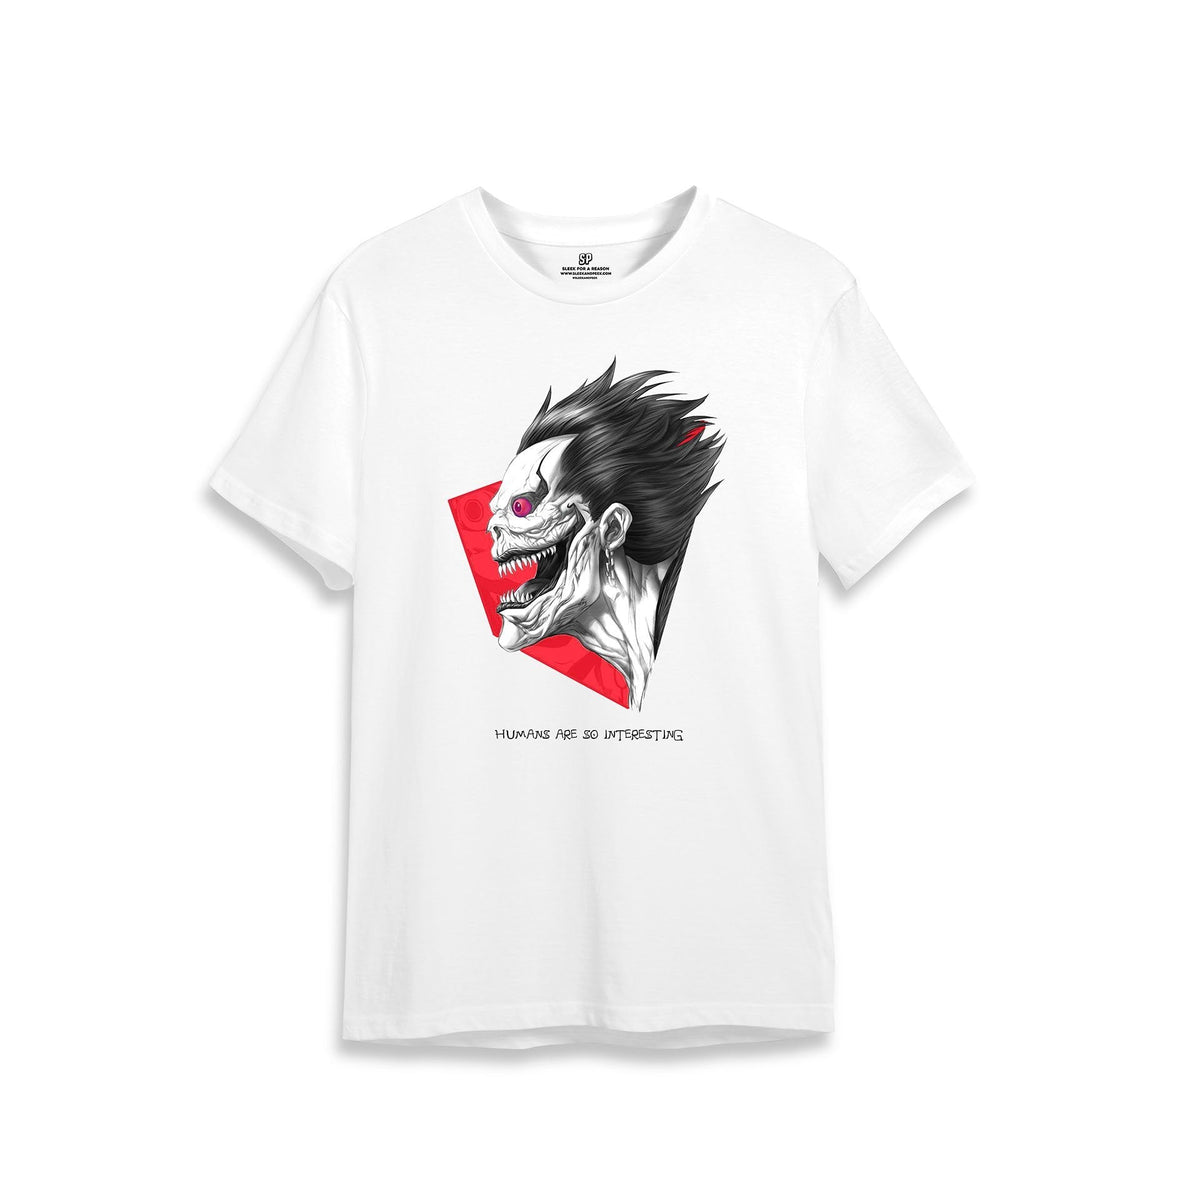 Ryuk - Death Note - T-shirt - Sleek&Peek